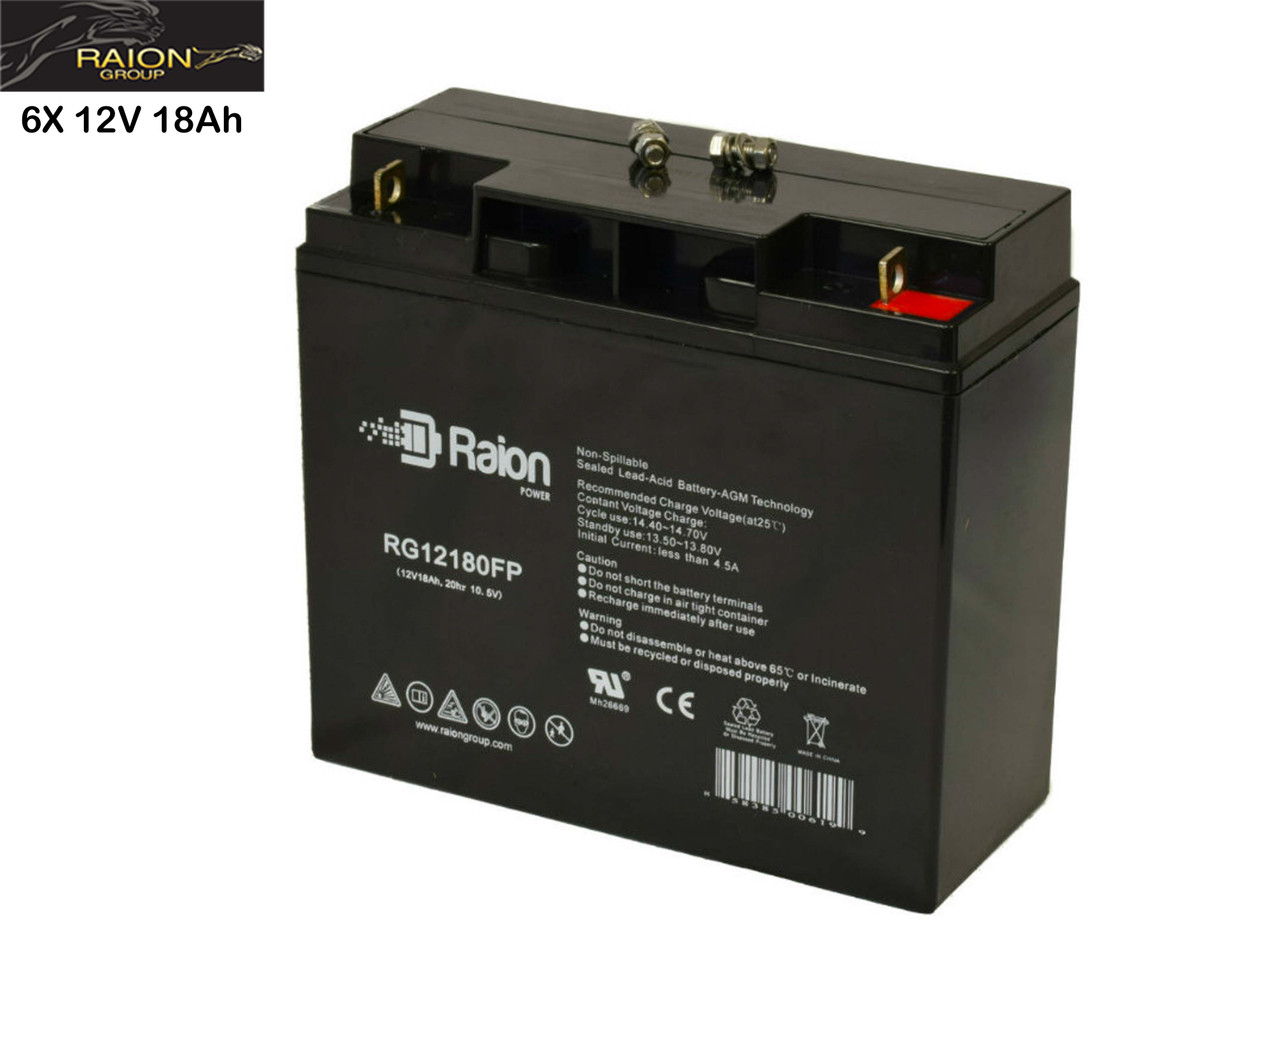 Raion Power Replacement 12V 18Ah Battery for TaoTao Scorpio M3 - 6 Pack